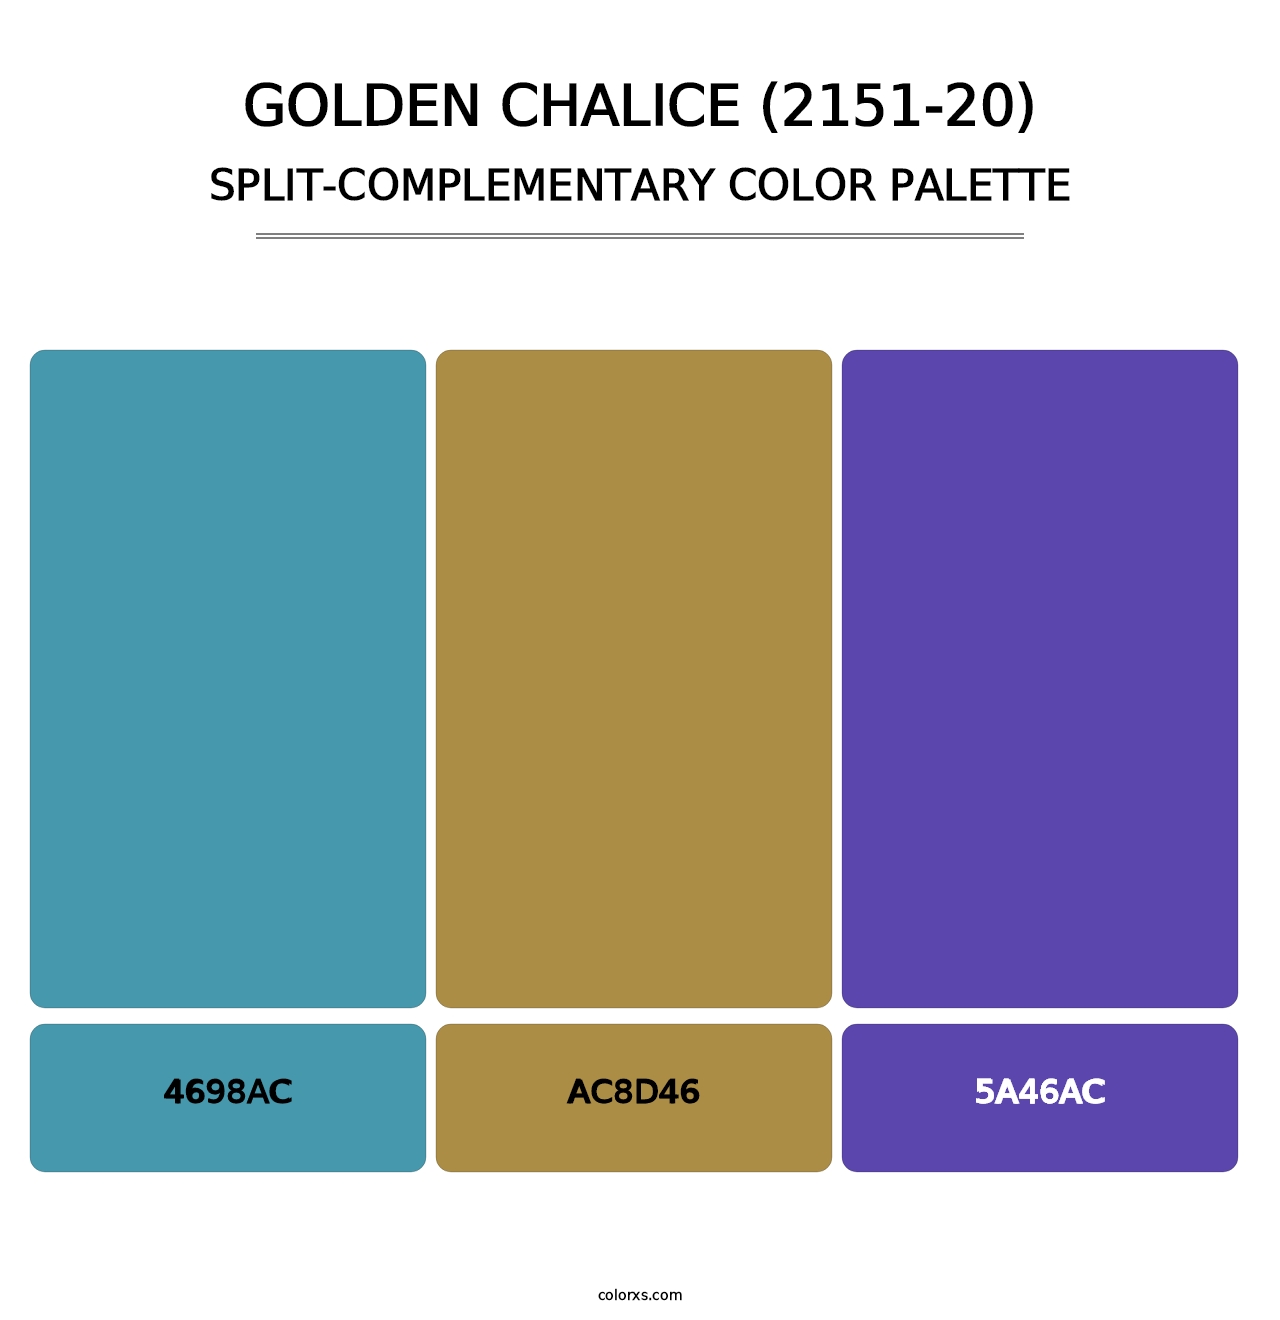 Golden Chalice (2151-20) - Split-Complementary Color Palette